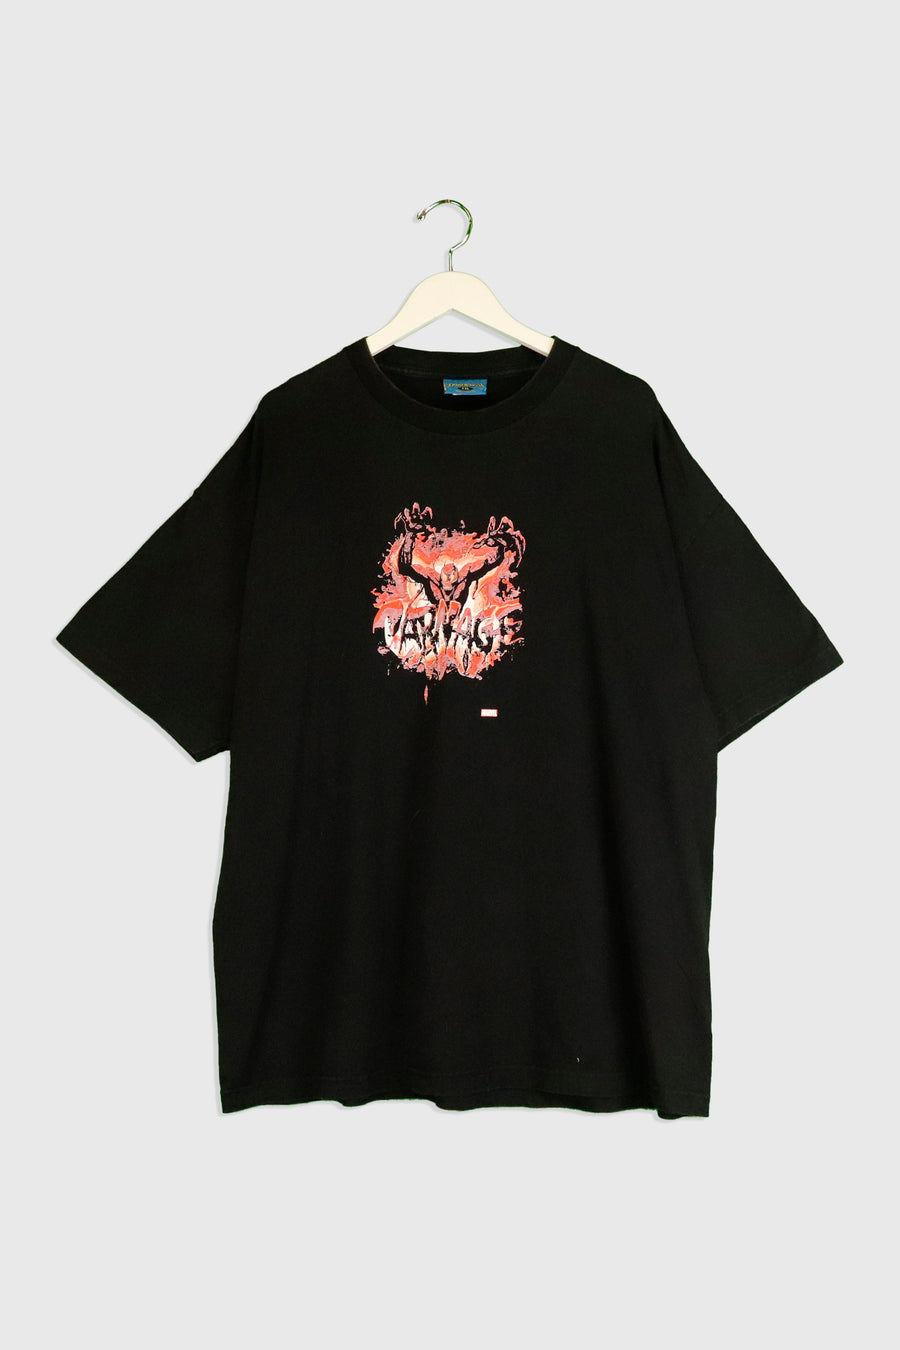 Vintage 2006 Marvel Venom Carnage Vinyl T Shirt Sz 2XL